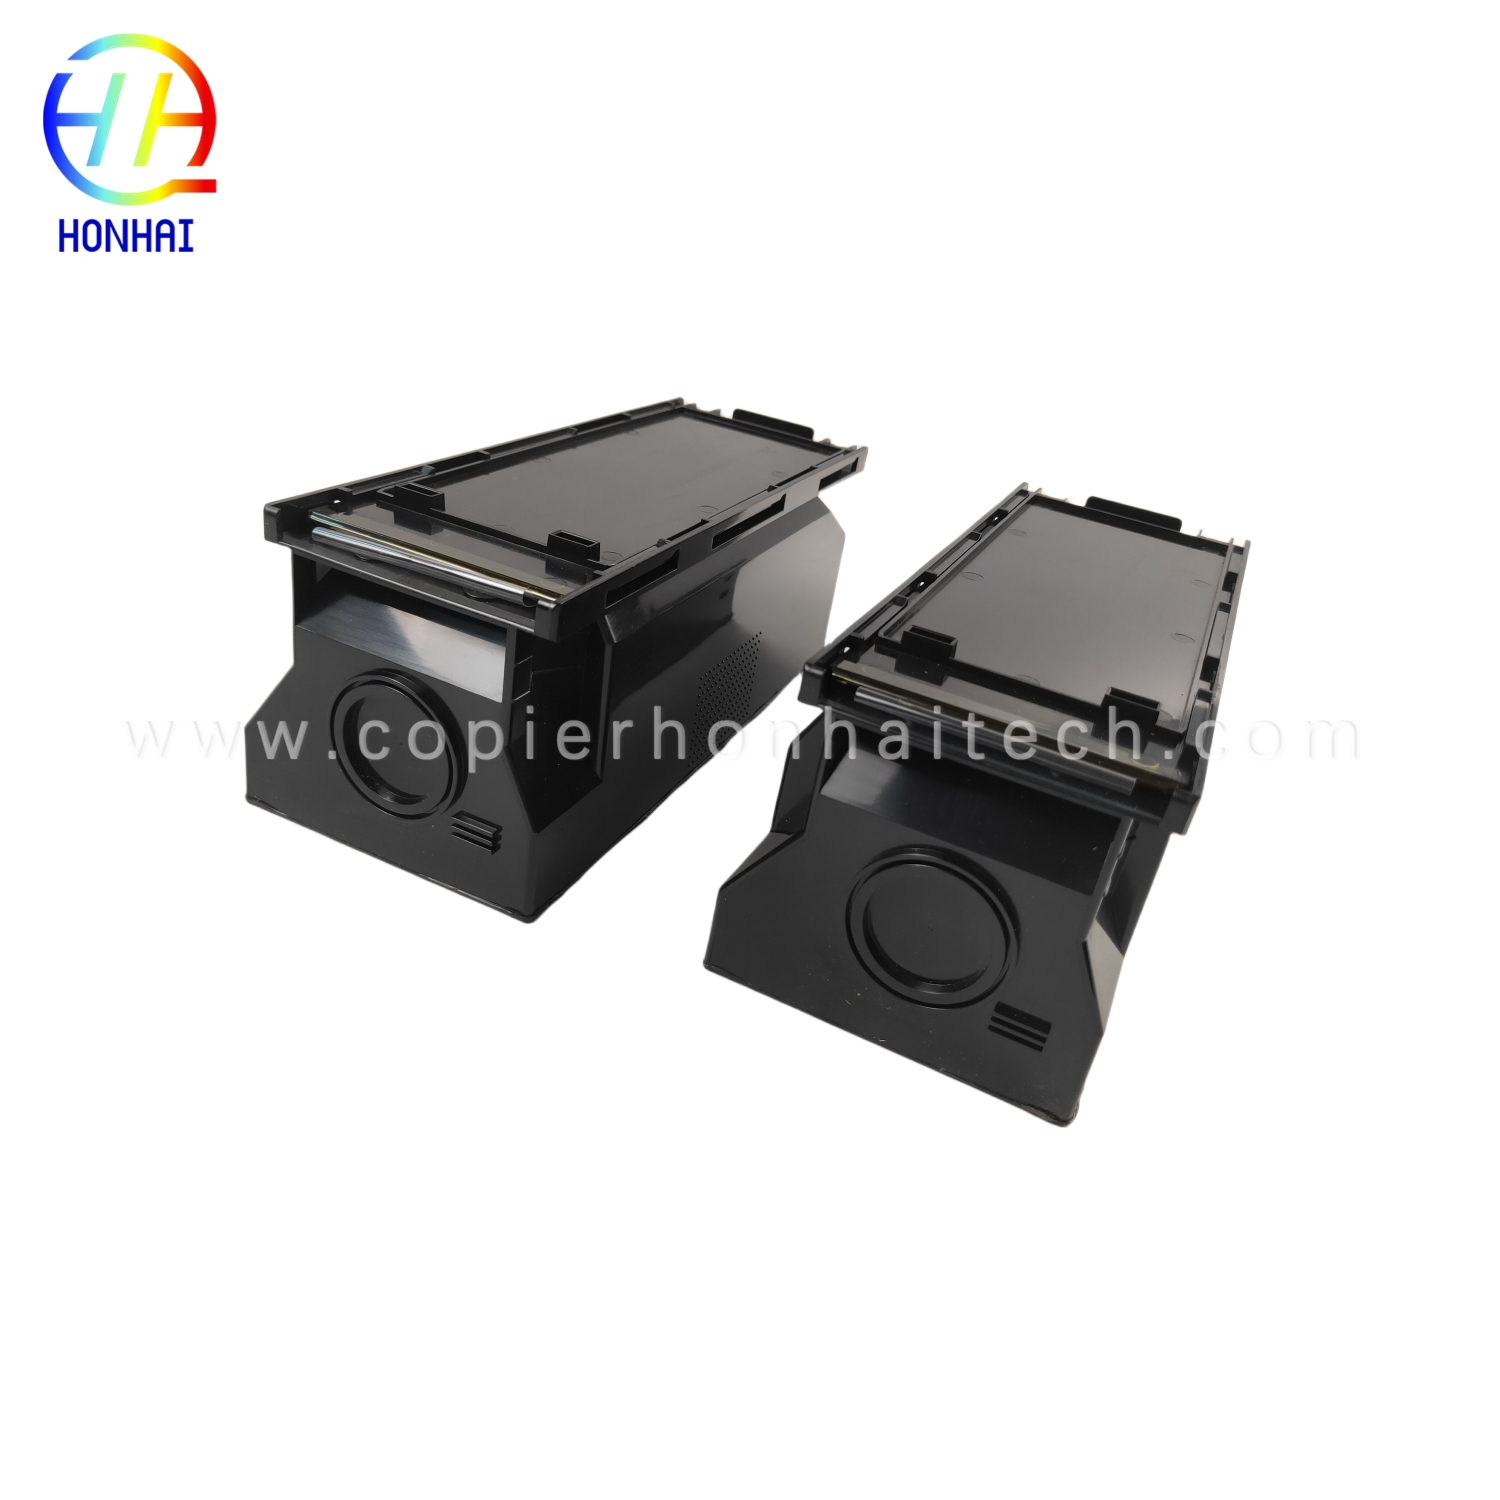 https://www.copierhonhaitech.com/origen-new-toner-cartridge-black-for-oki-1z20f2-seiko-lp-761-lp1030-lp2050-product/